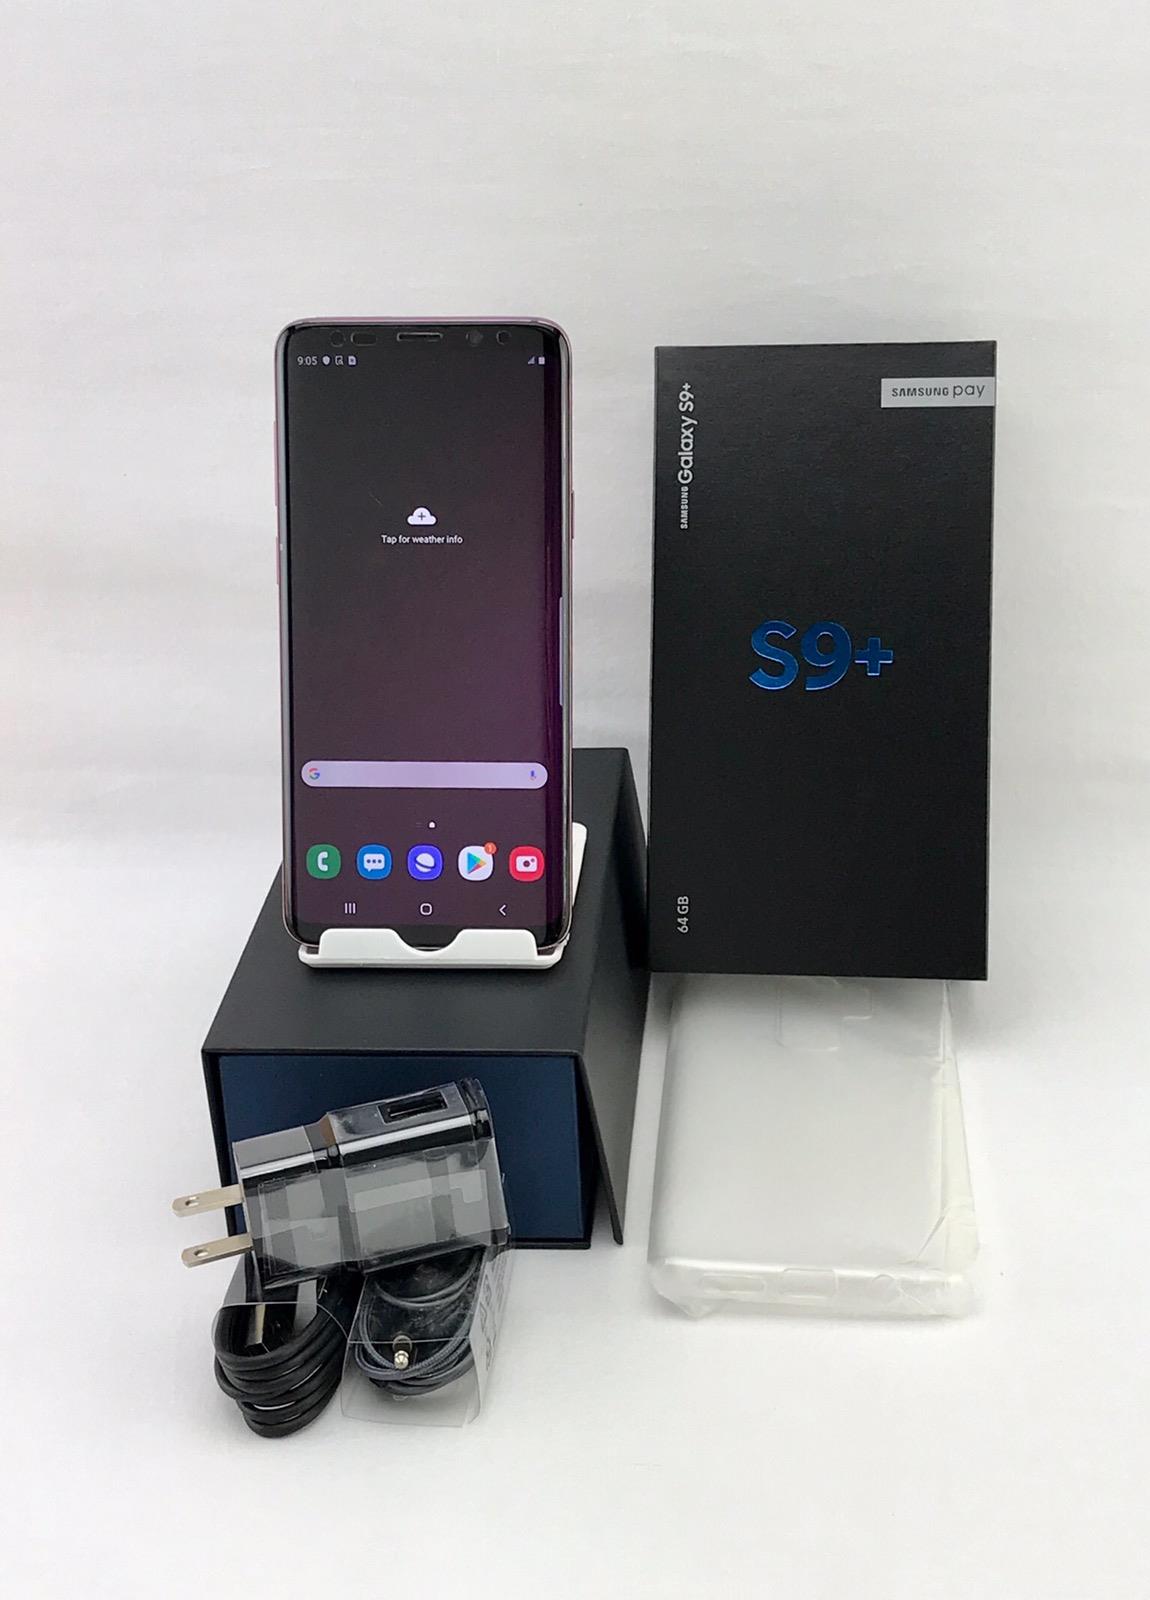 Samsung Galaxy S9 Plus SM-G965U1 64GB Purple! Unlocked! Free Fast